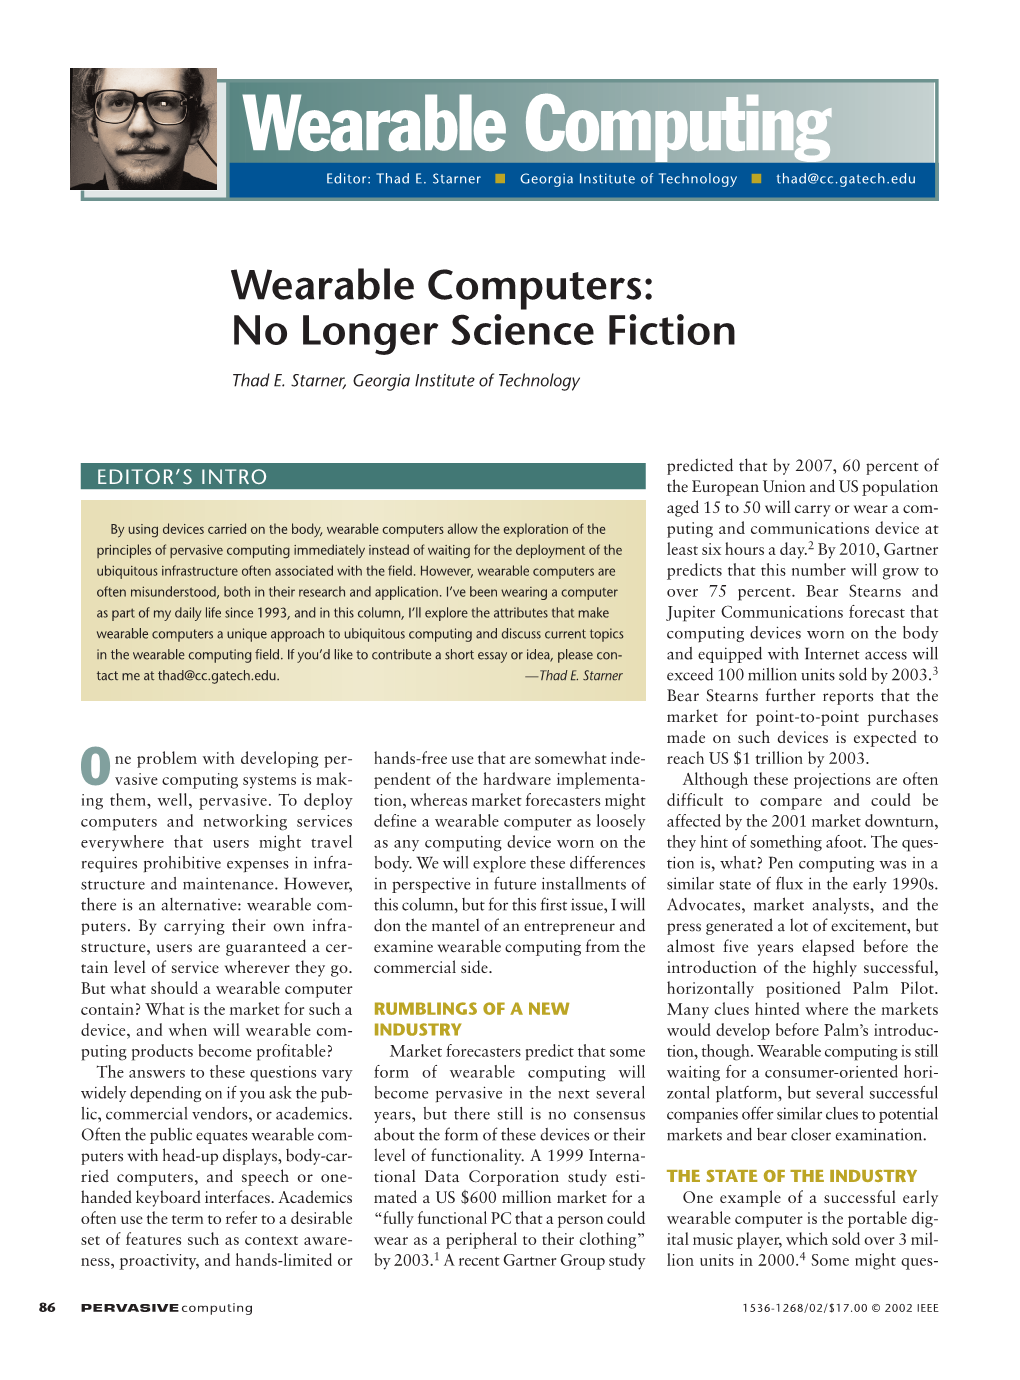 Wearable Computers: No Longer Science Fiction